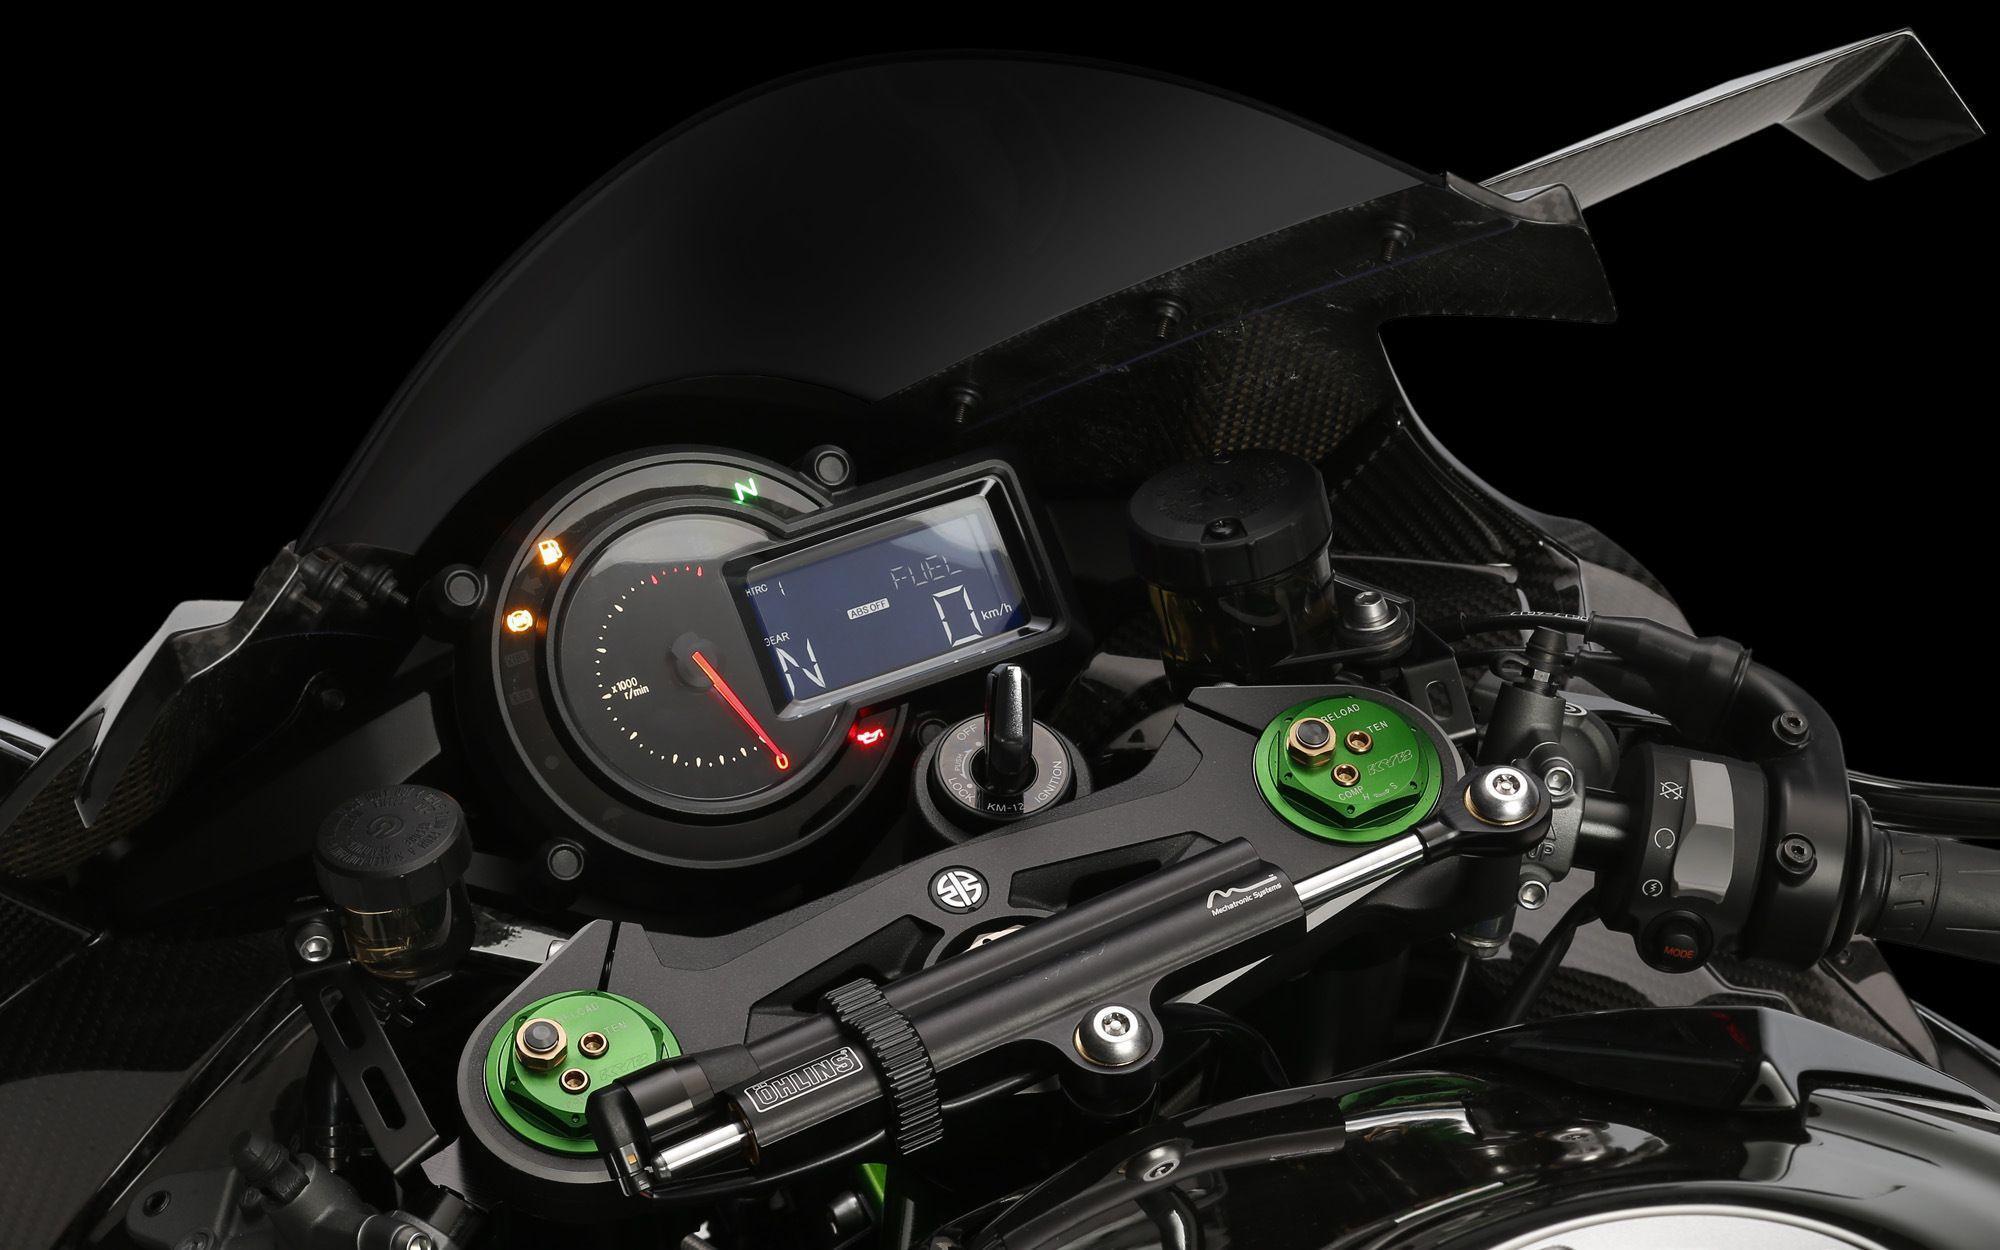 Kawasaki Ninja H2R Dashboard Moto HD Wallpaper. Projects to Try